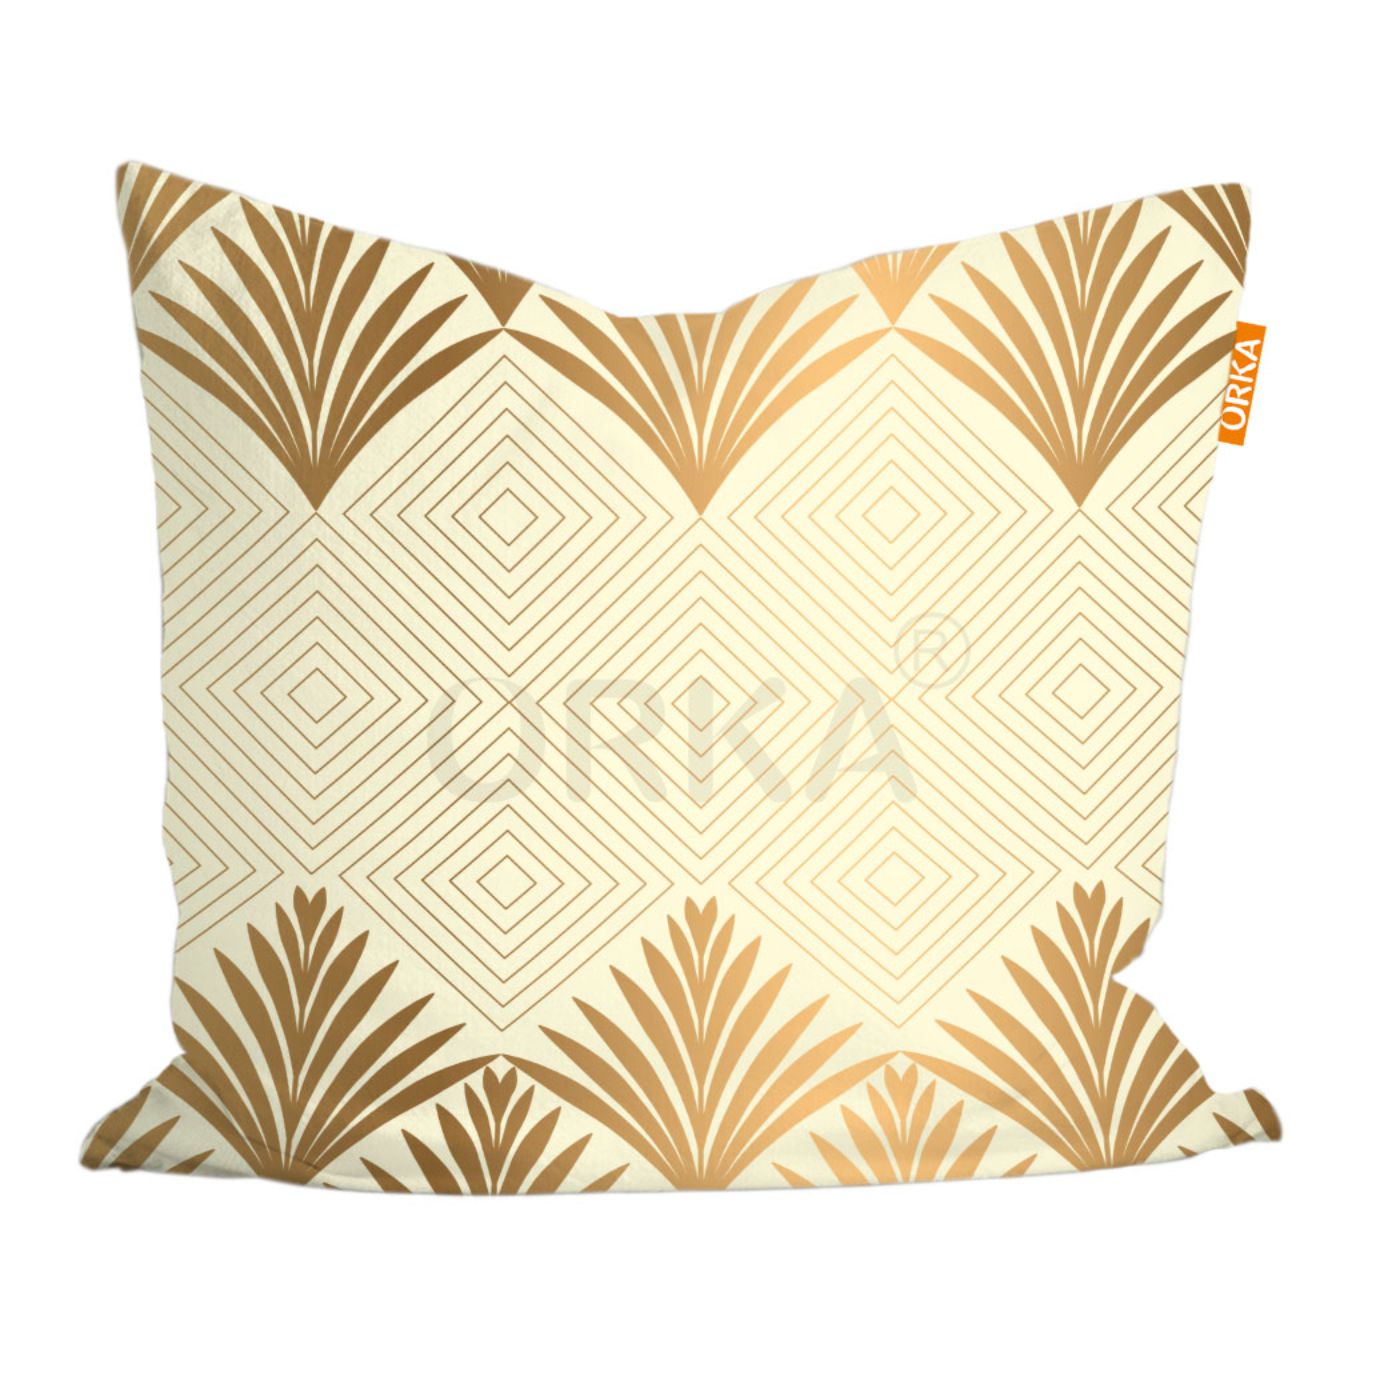 ORKA Digital Printed Cushion 18 14"x14" Cover Only